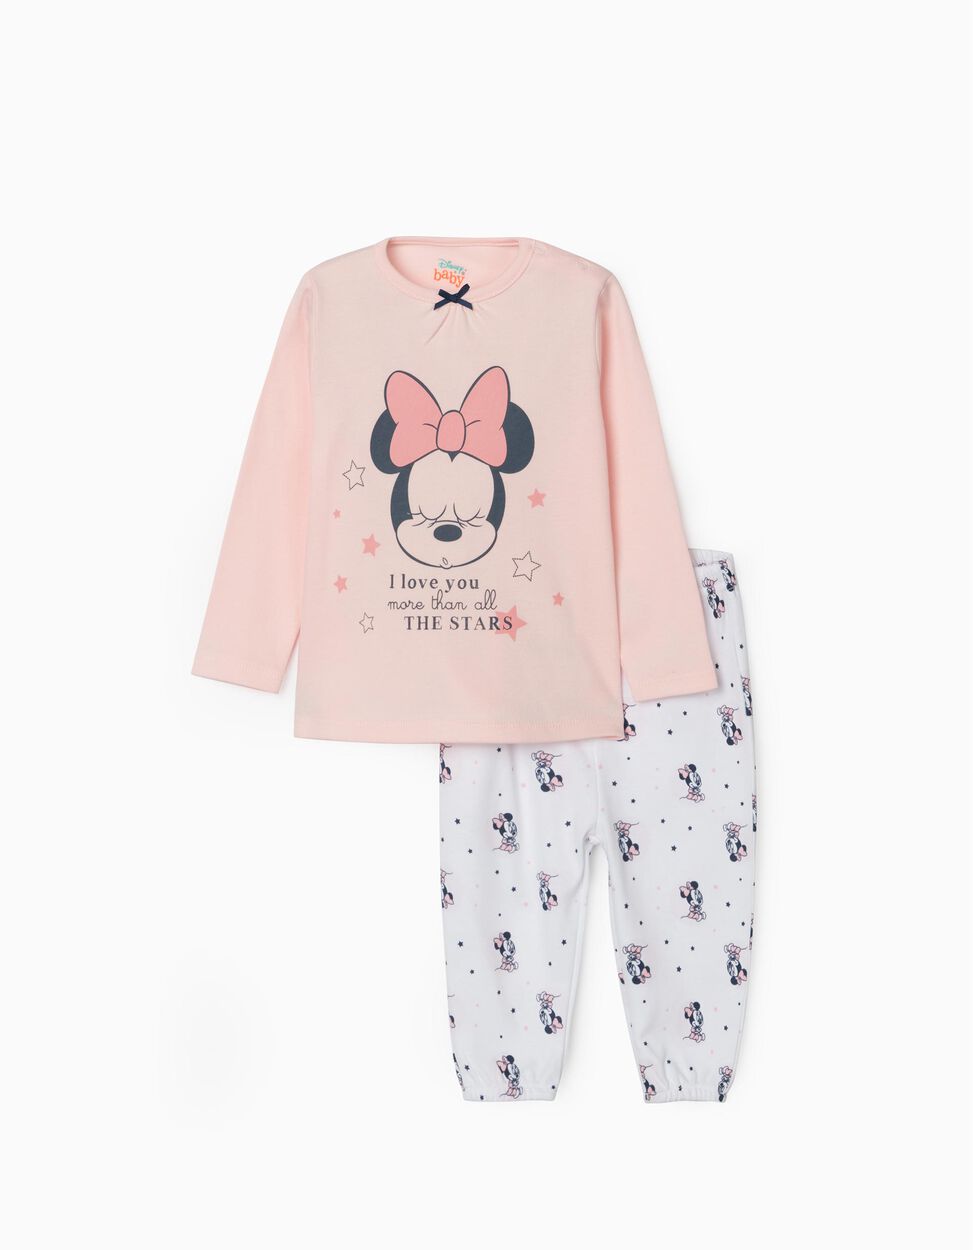 medio Motivar Productos lácteos Pijama para Bebé Niña 'Minnie', Rosa/Blanco | Zippy Online España